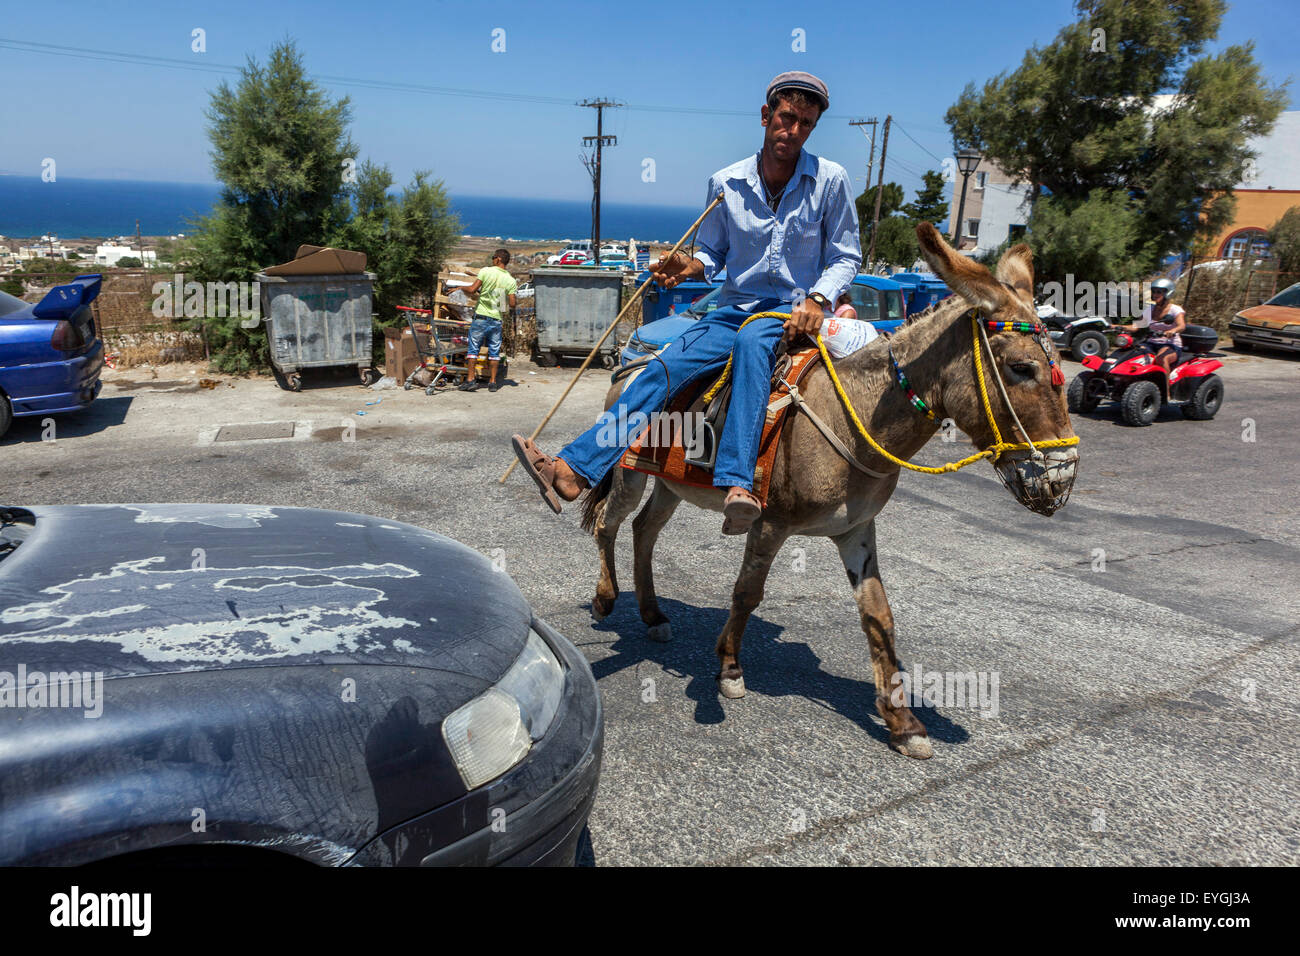 A rider on a donkey in Oia, Santorini, Greek Islands, Greece Man riding donkey Stock Photo